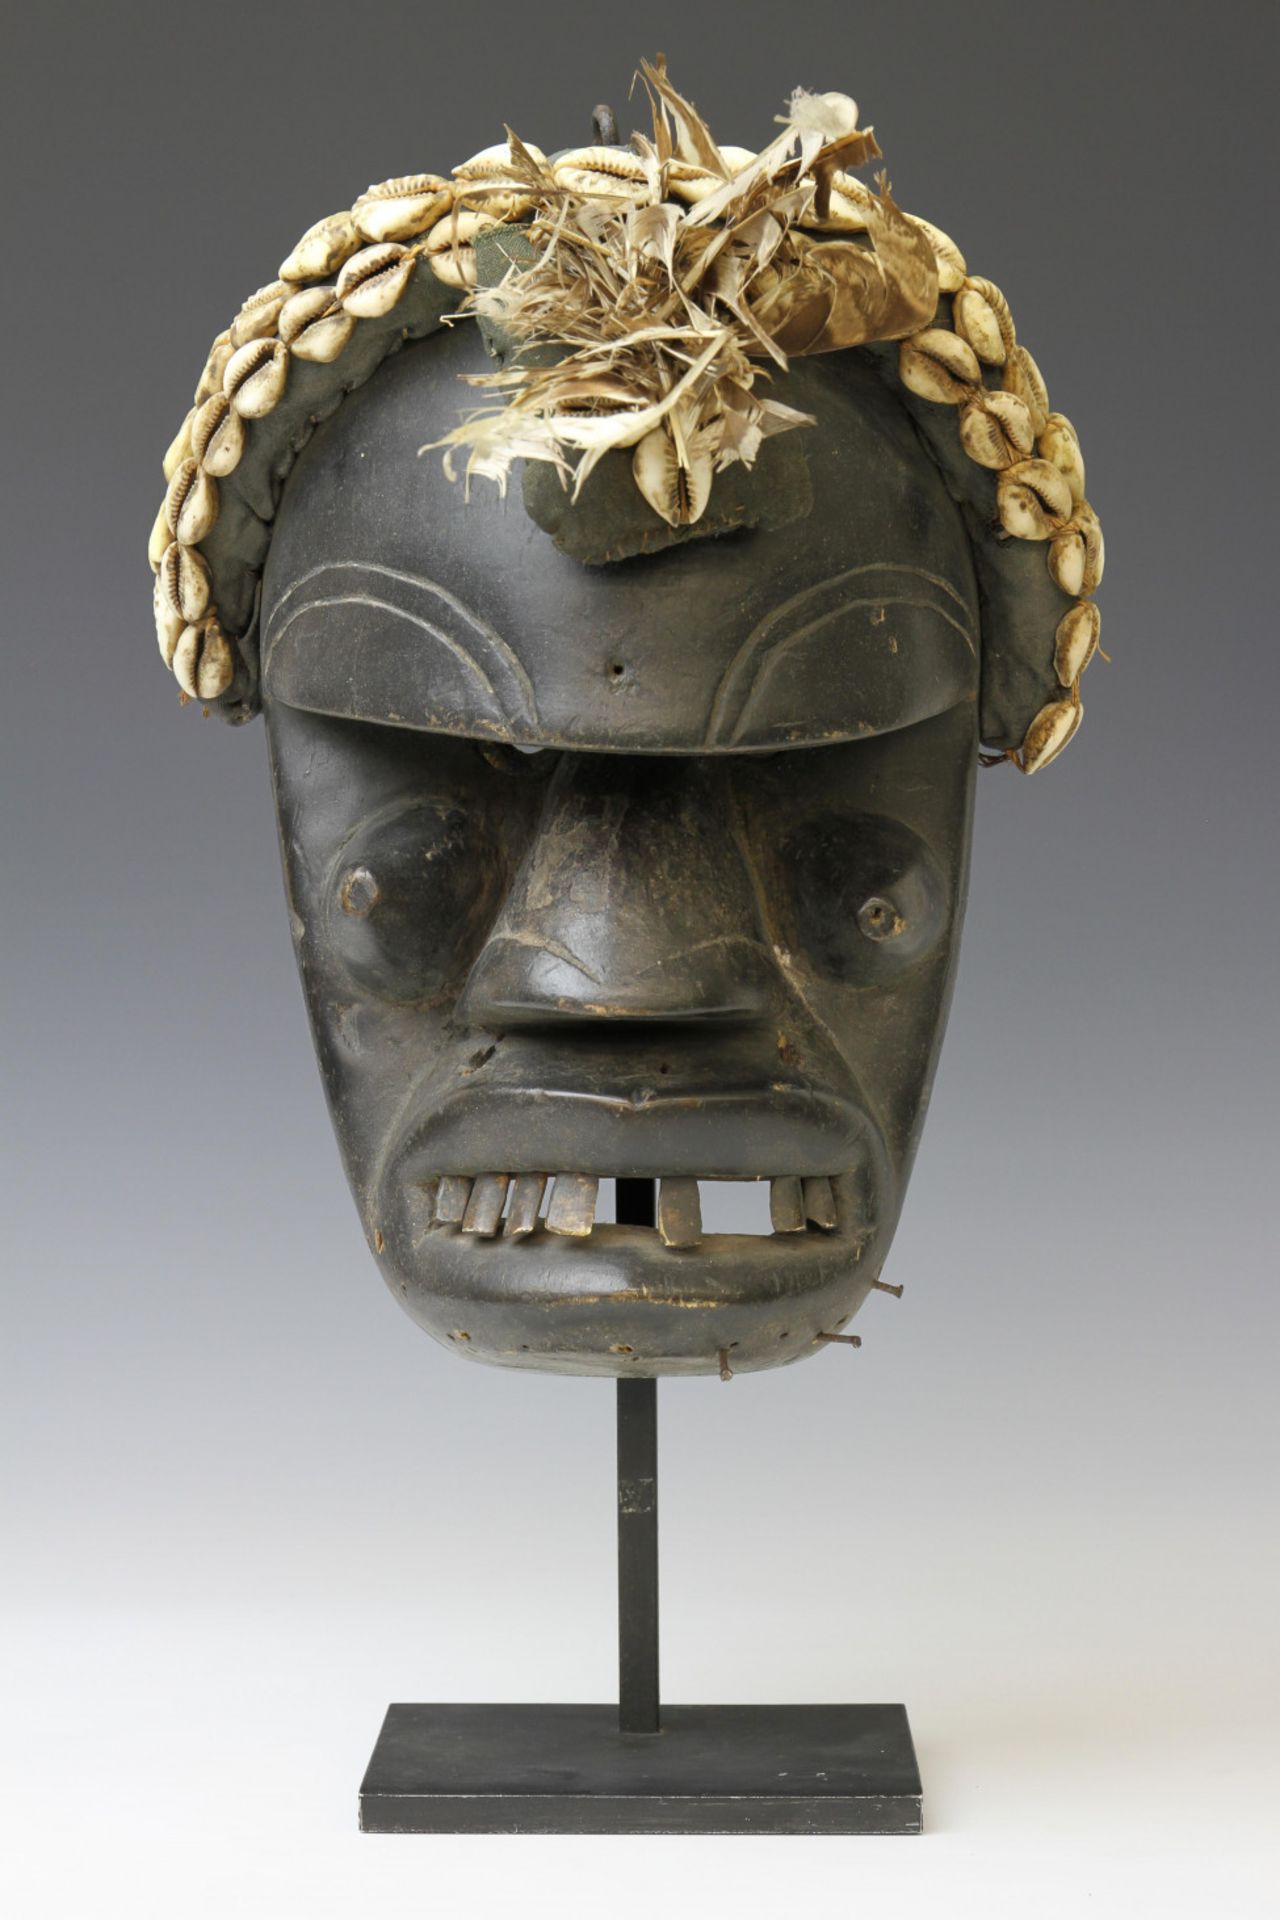 Ivory Coast, an style Dan mask